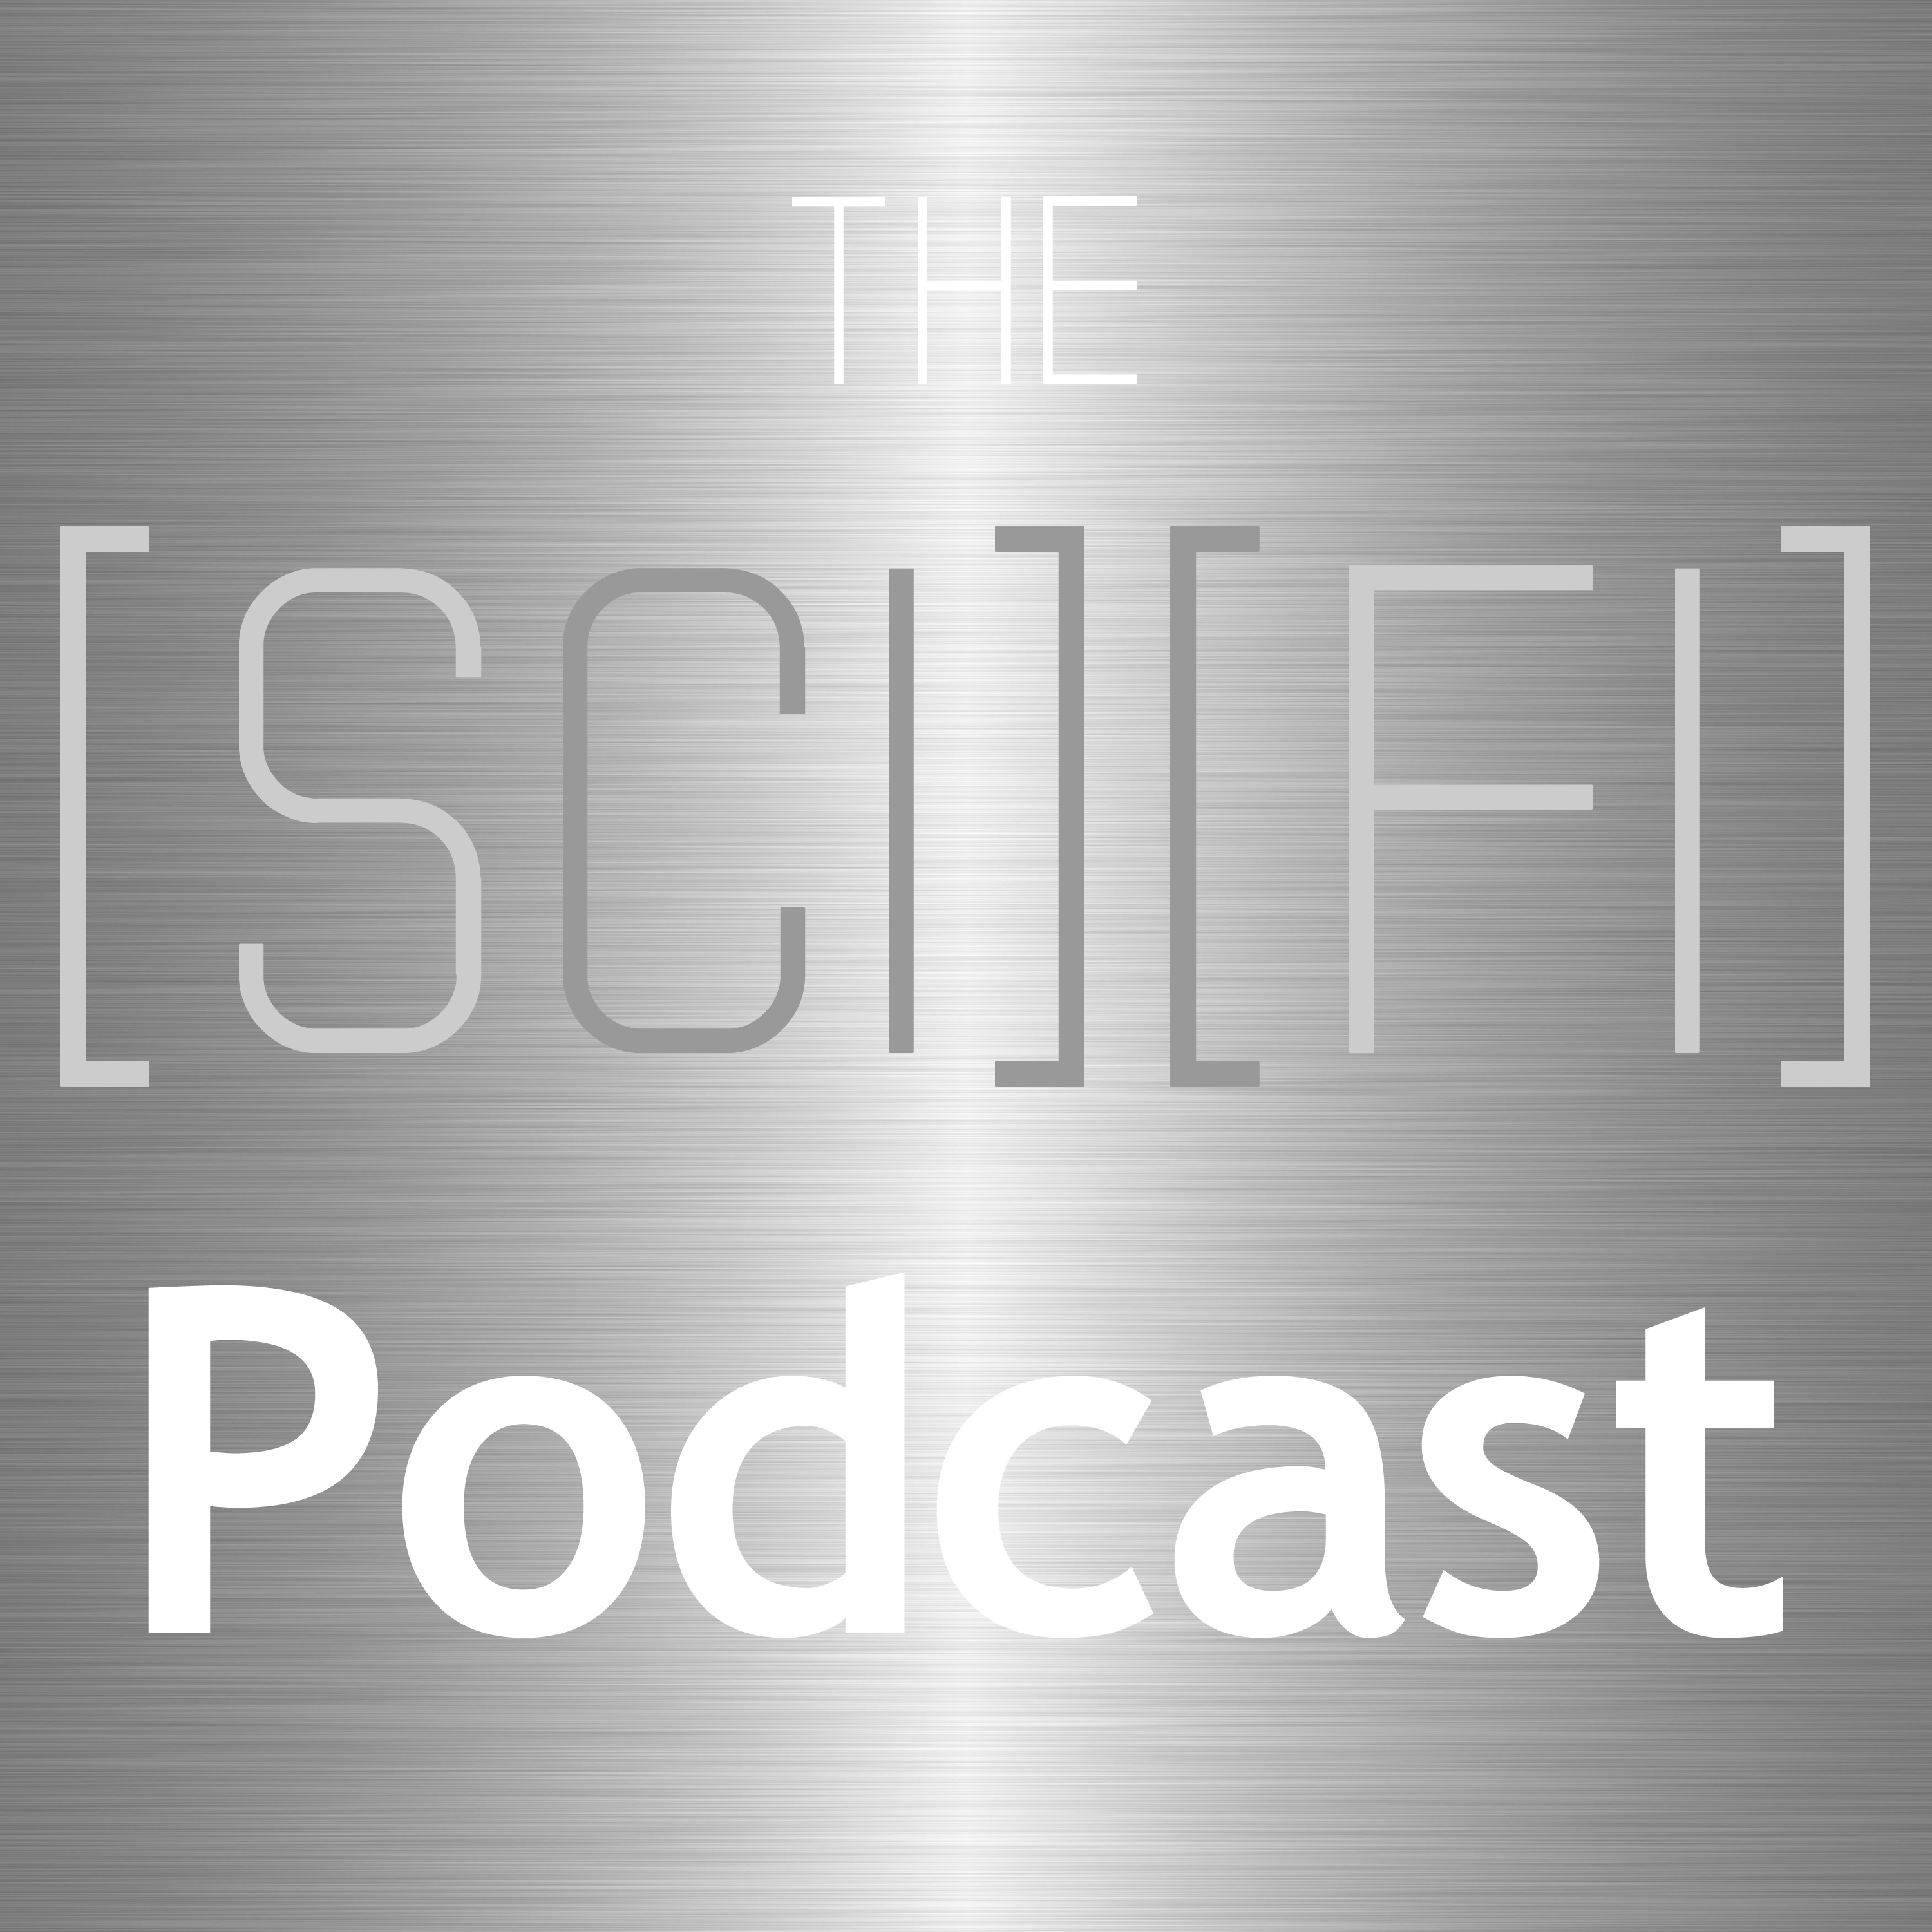 The Sci-Fi Podcast